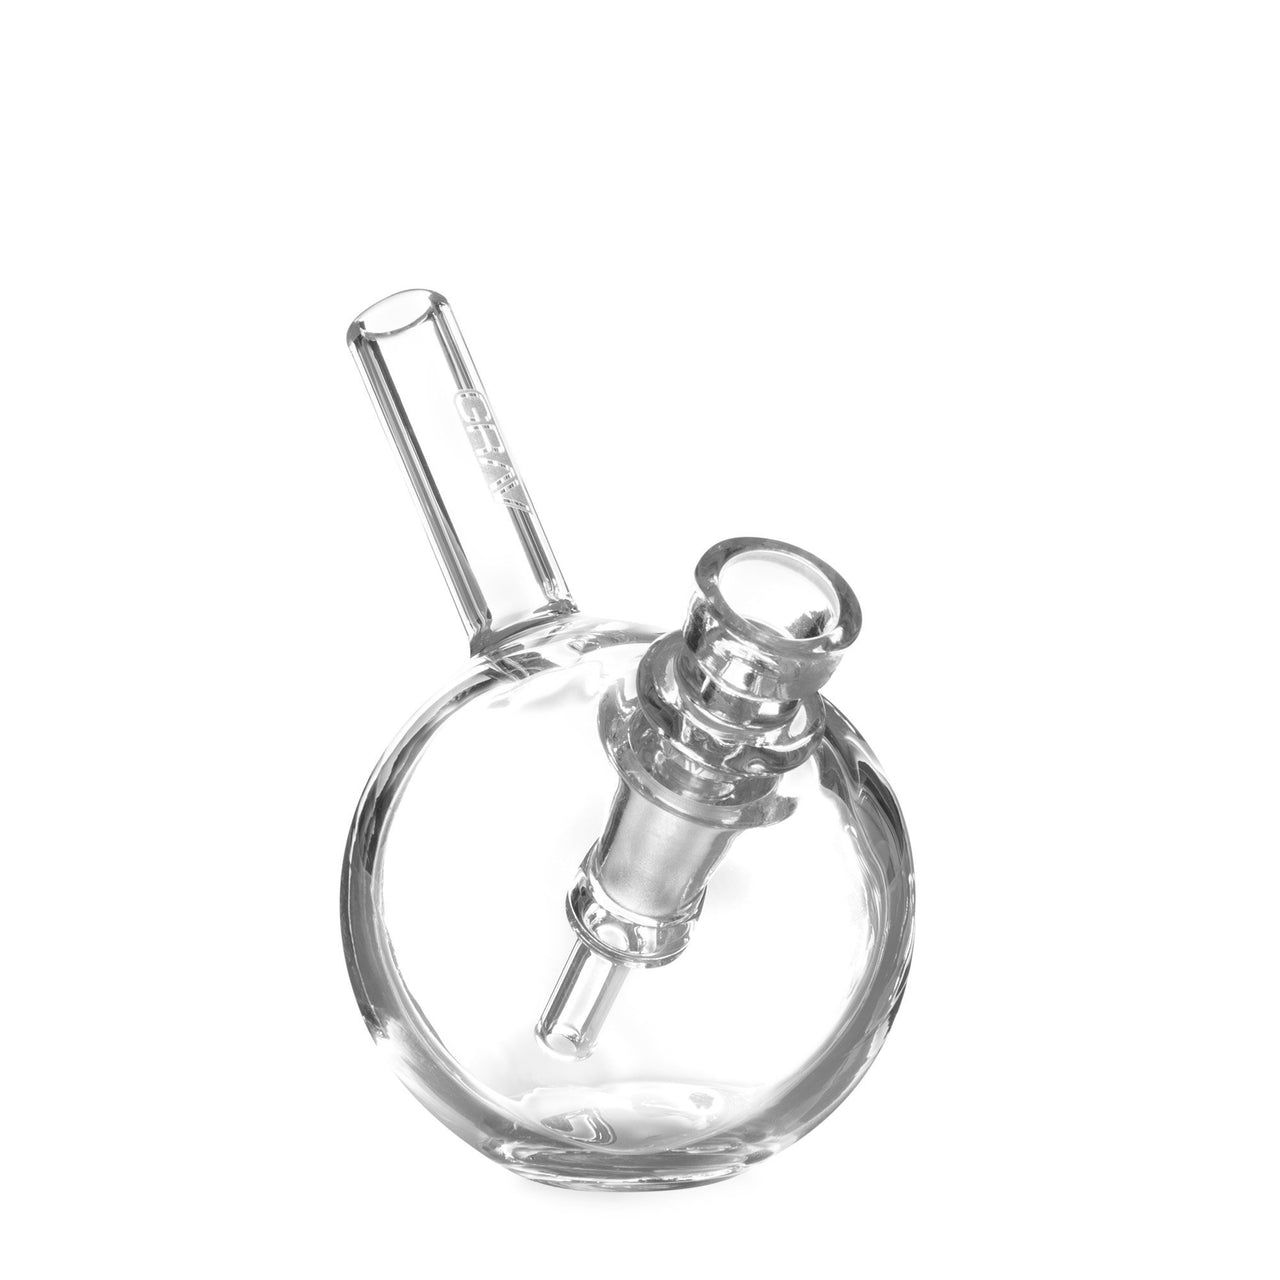 GRAV Spherical Pocket Bubbler - 420 Science - The most trusted online smoke shop.